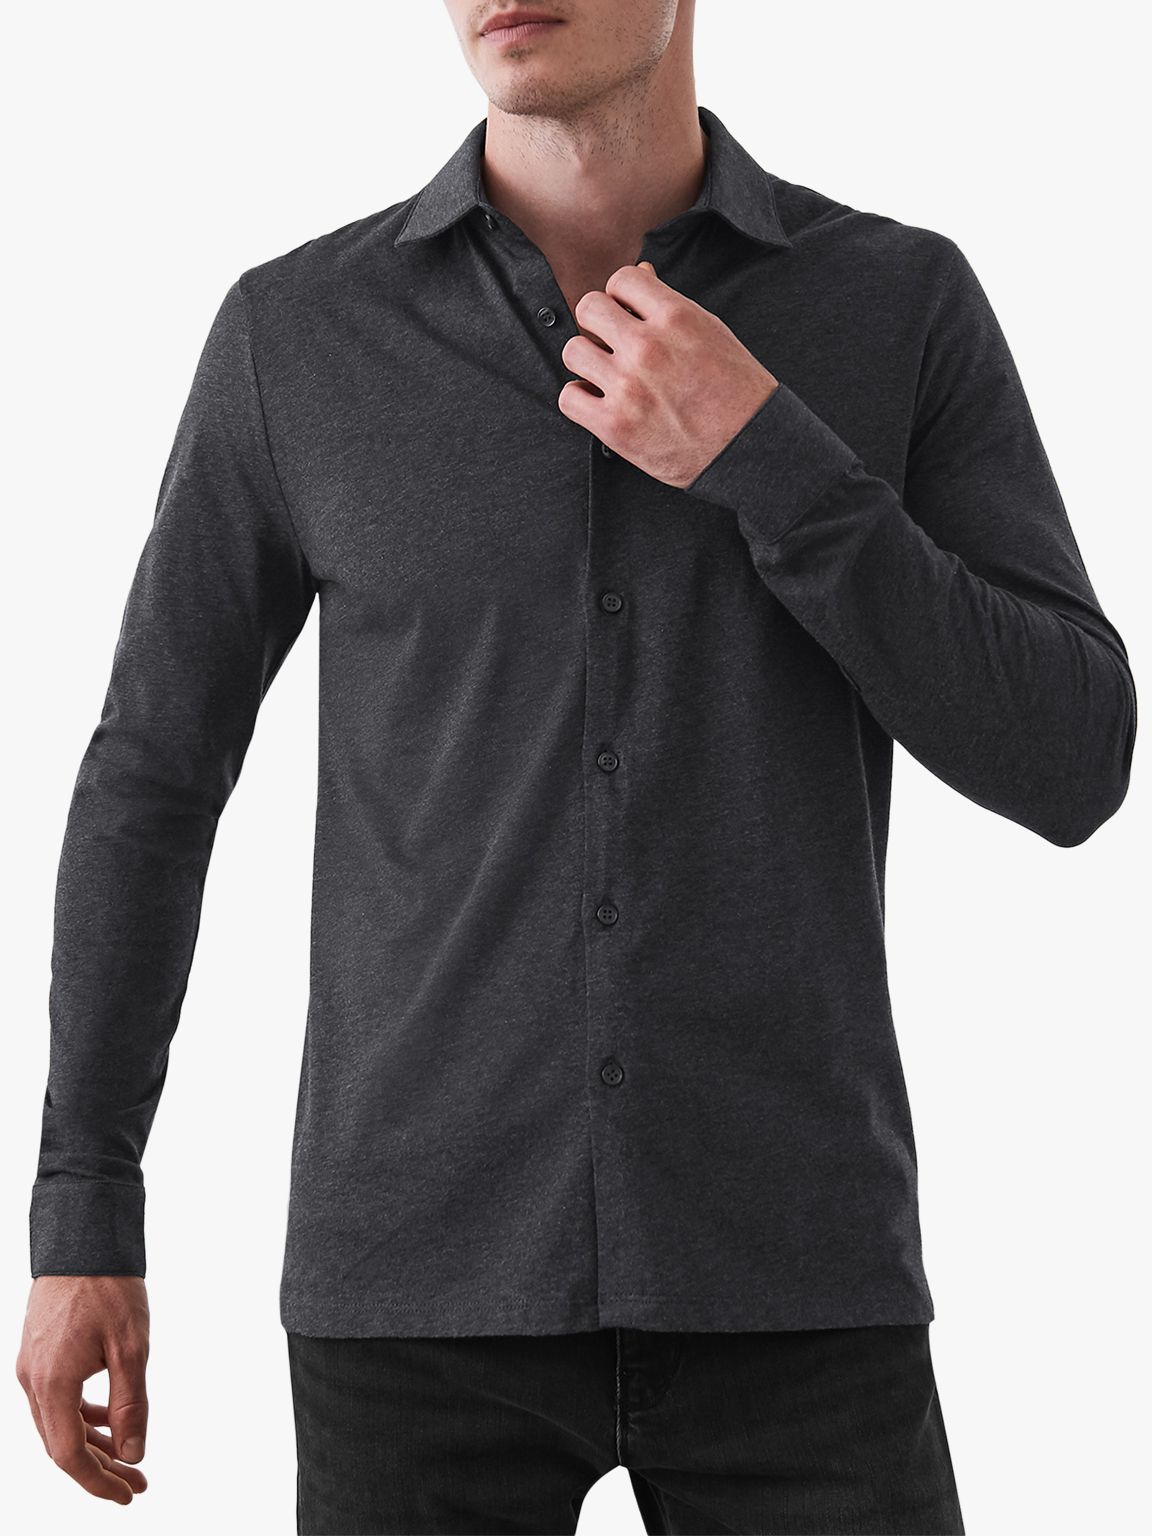 Reiss Verse Mercerised Cotton Slim Fit Shirt, Charcoal